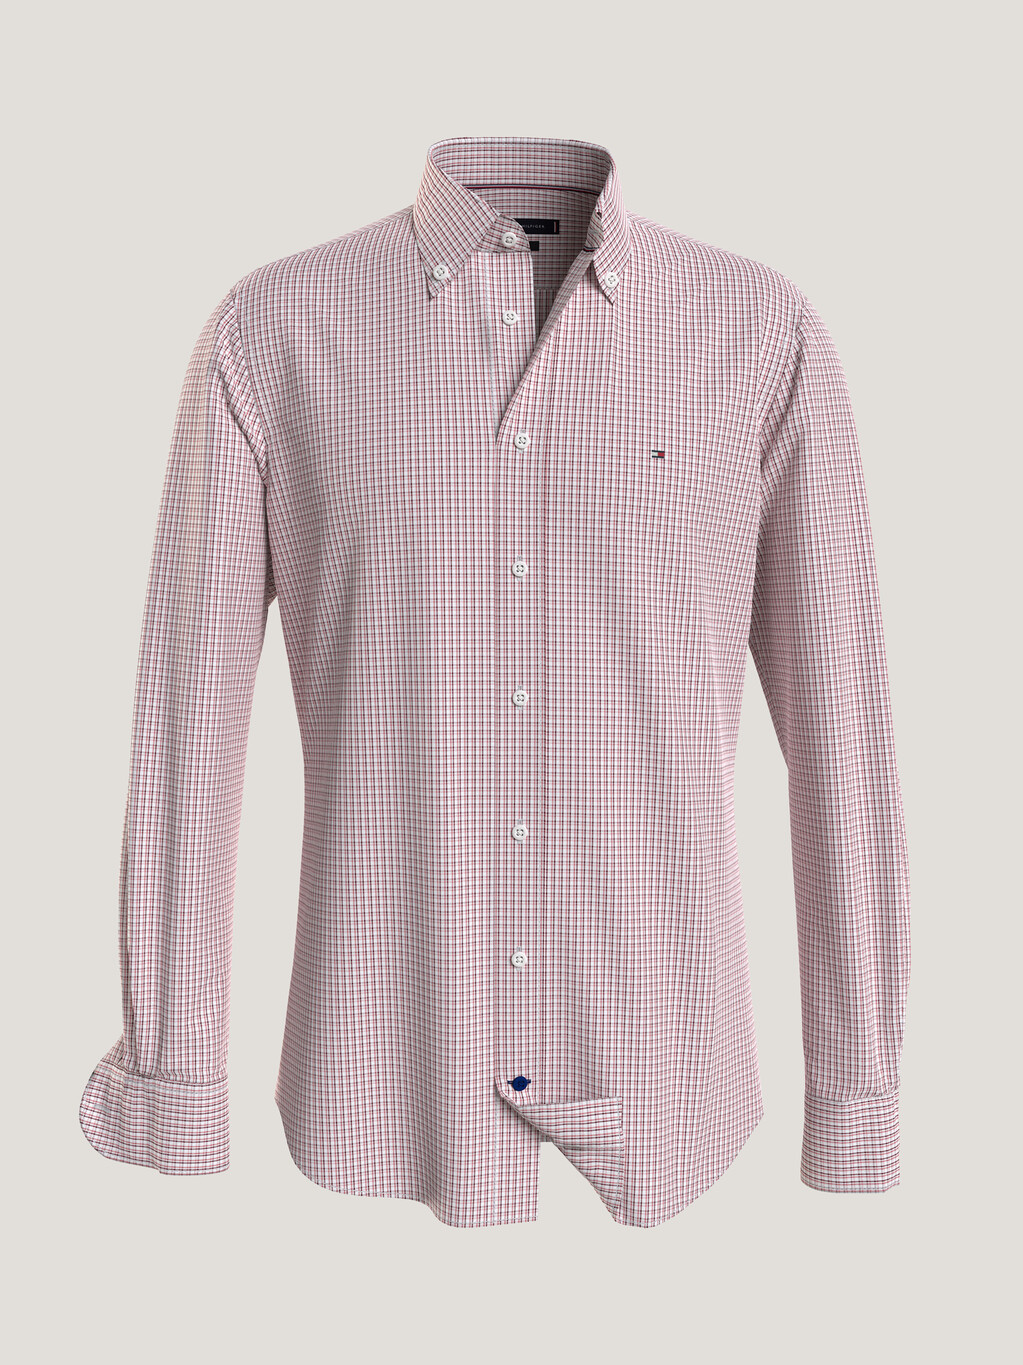 TH Check Oxford Shirt, Flora Pink/White, hi-res